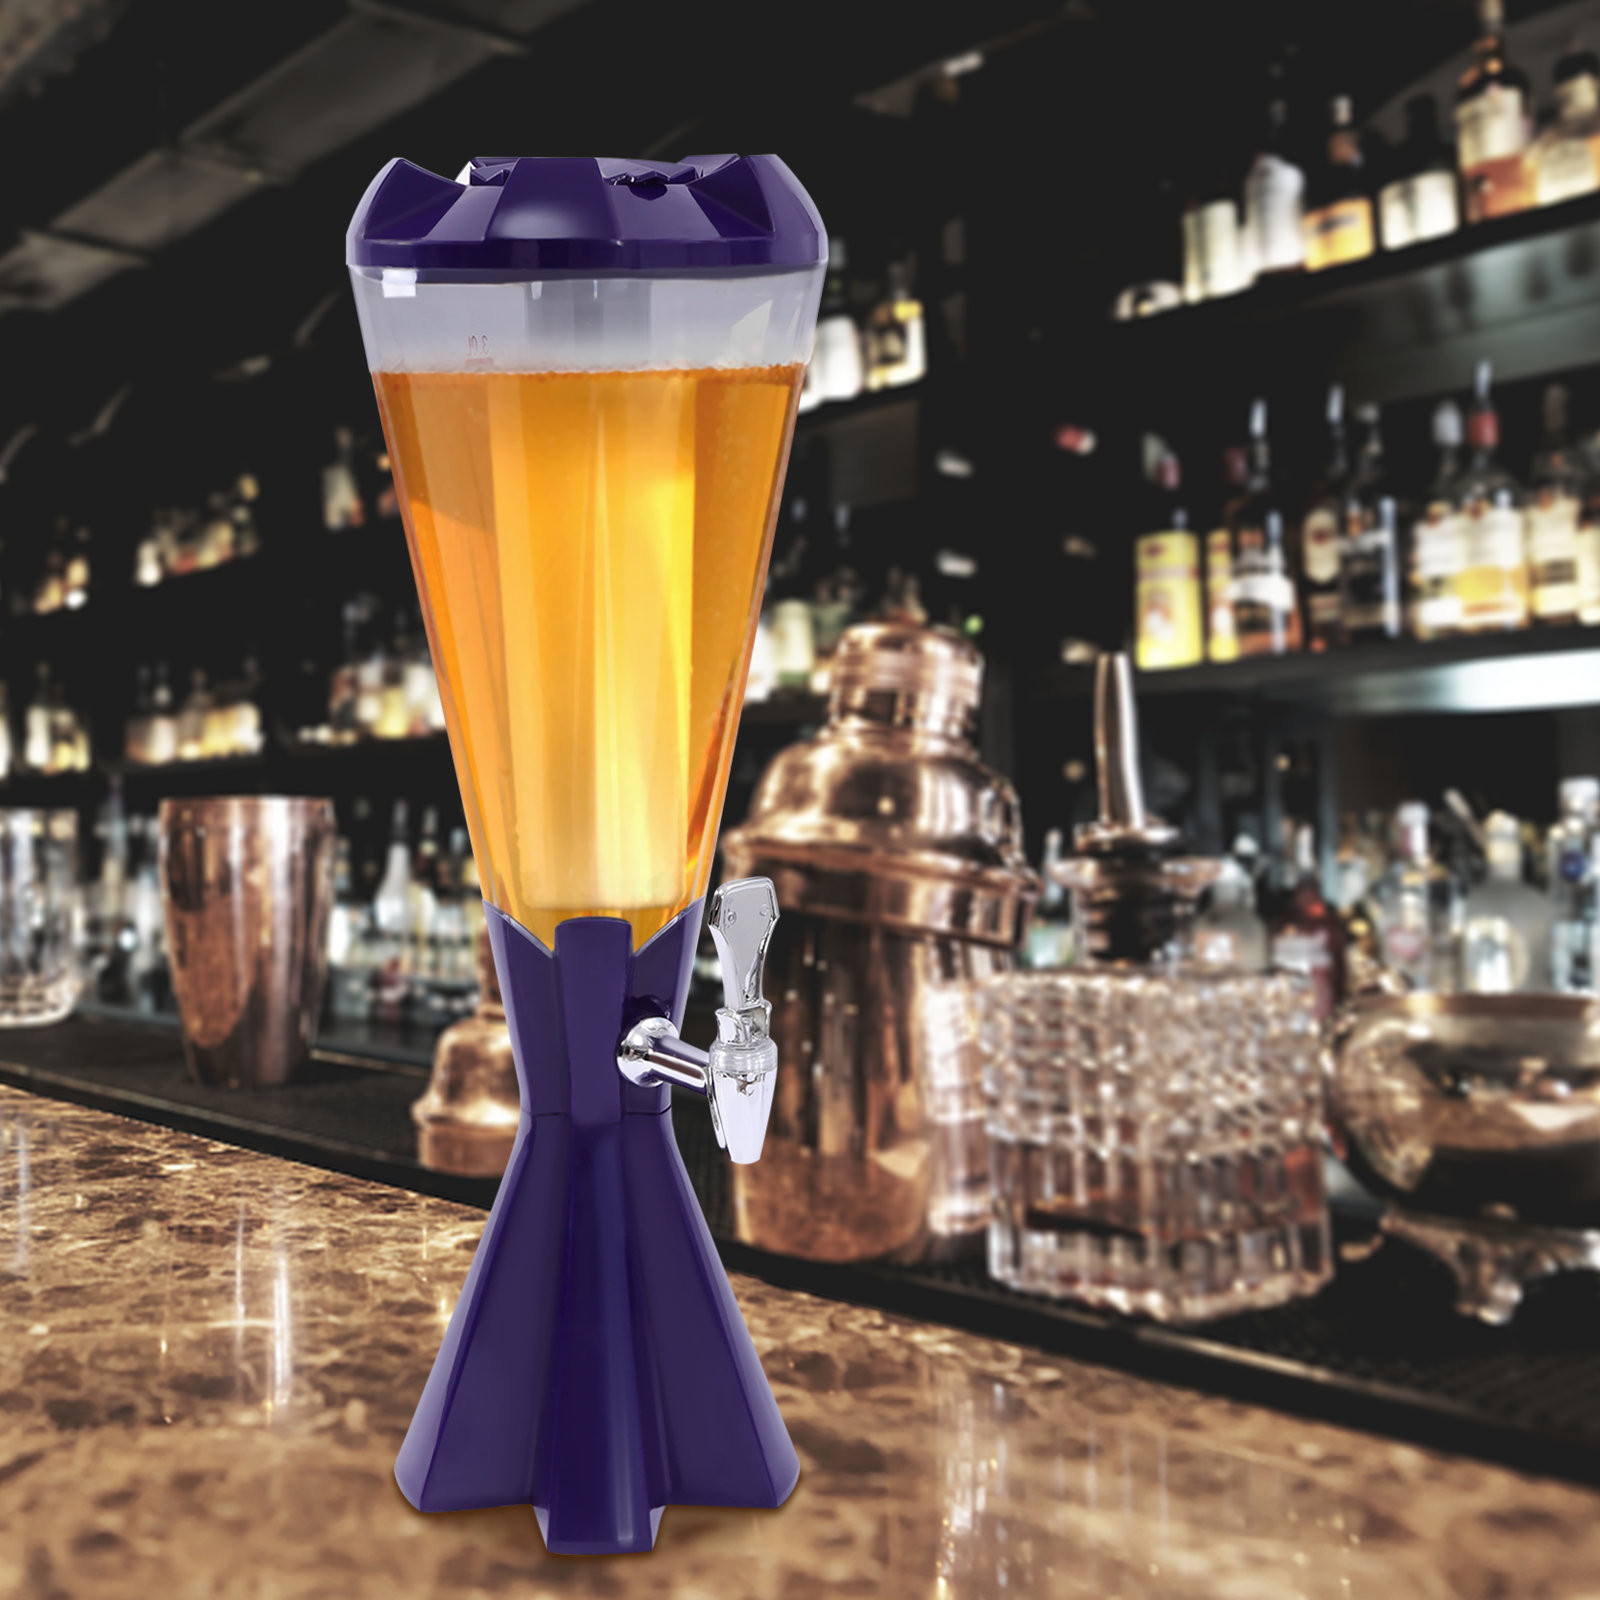 3L Draft Beer Tower Drink Beverage Dispenser Party Bar w/ Ice Tub &LED